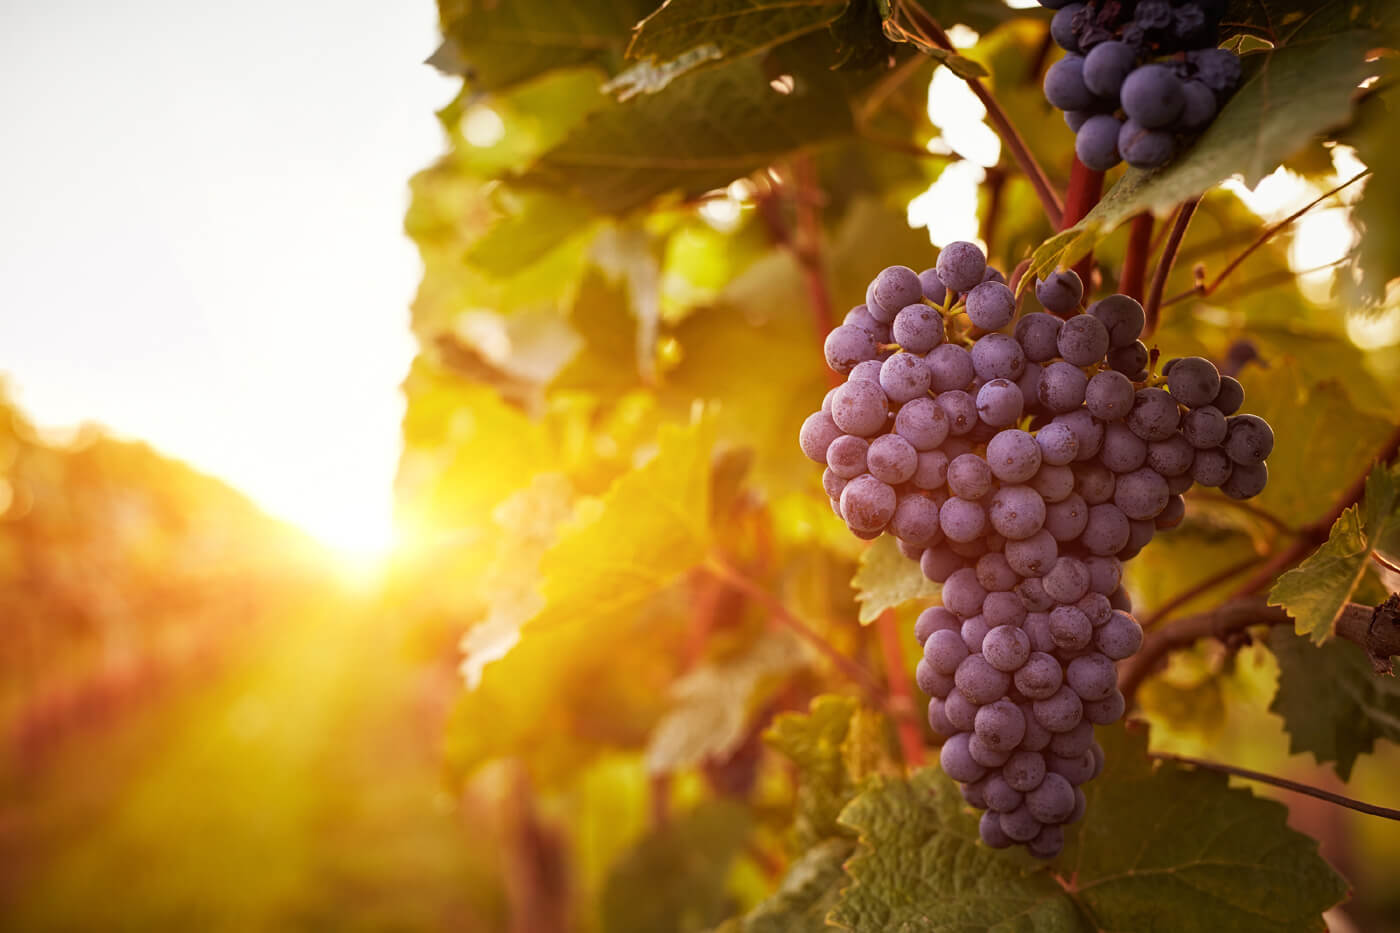 Wine grapes defenseless against environment